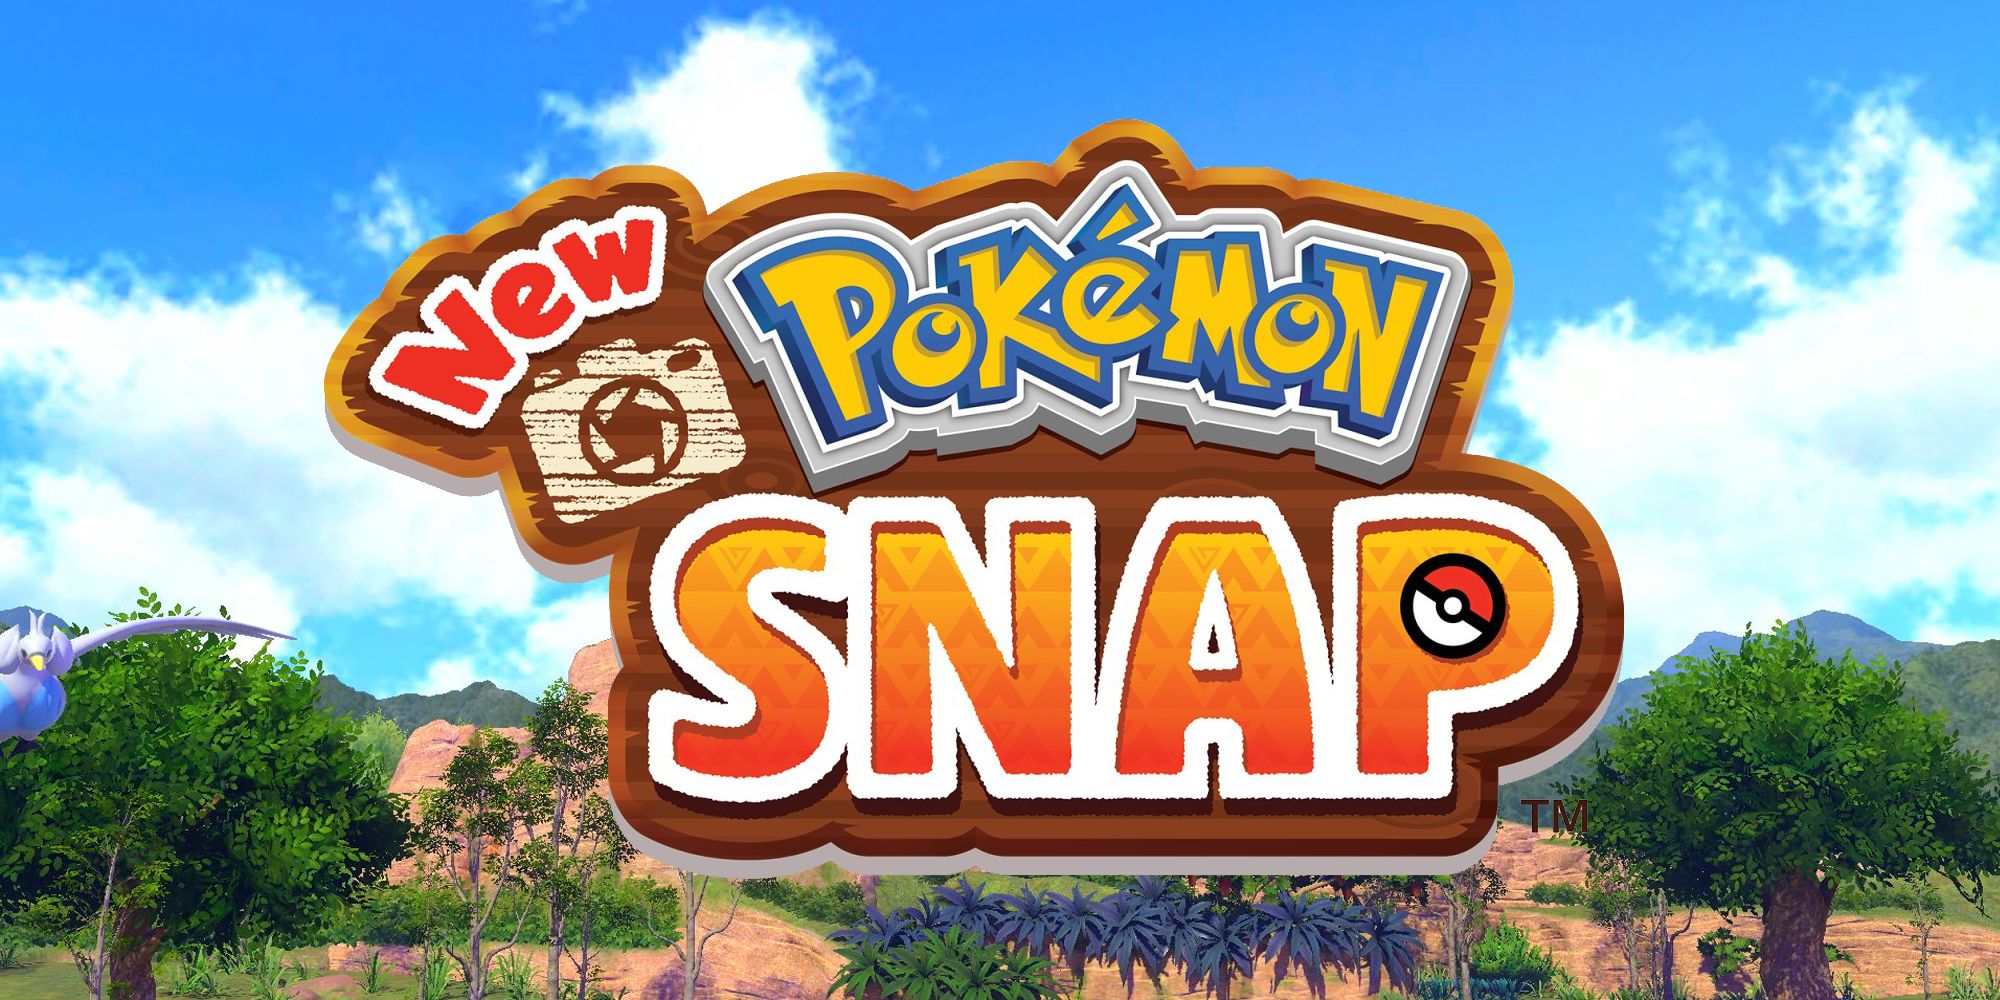 New Pokemon Snap's title screen